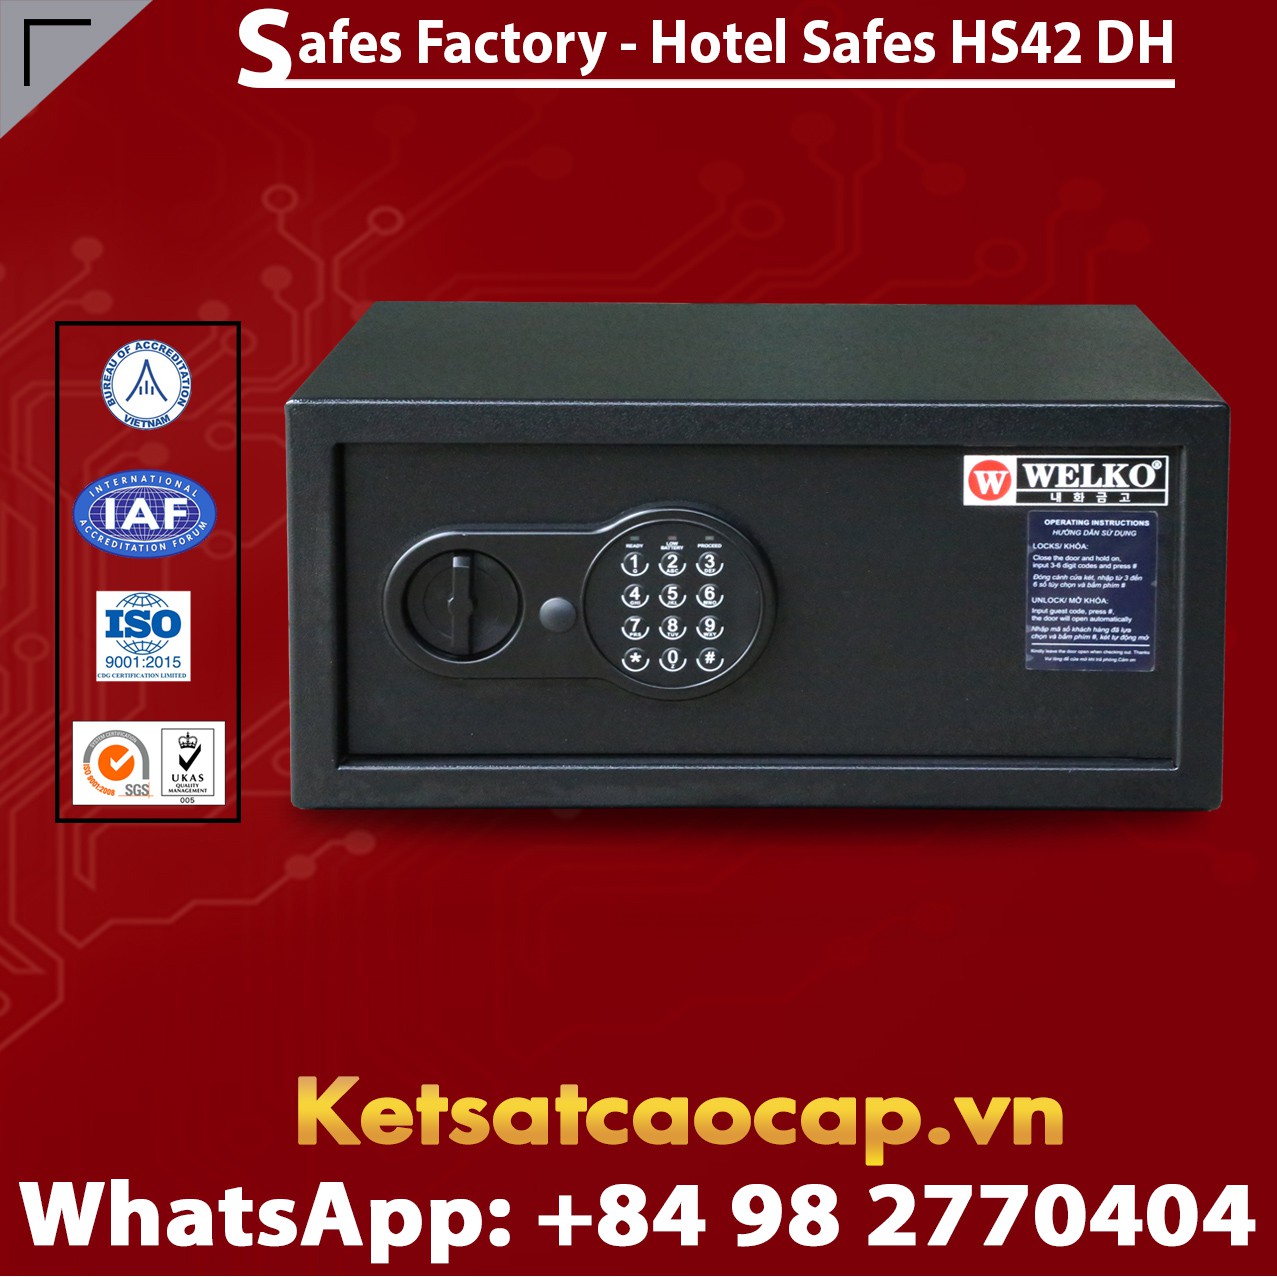 Safes in Hotel WELKO HS42 DH